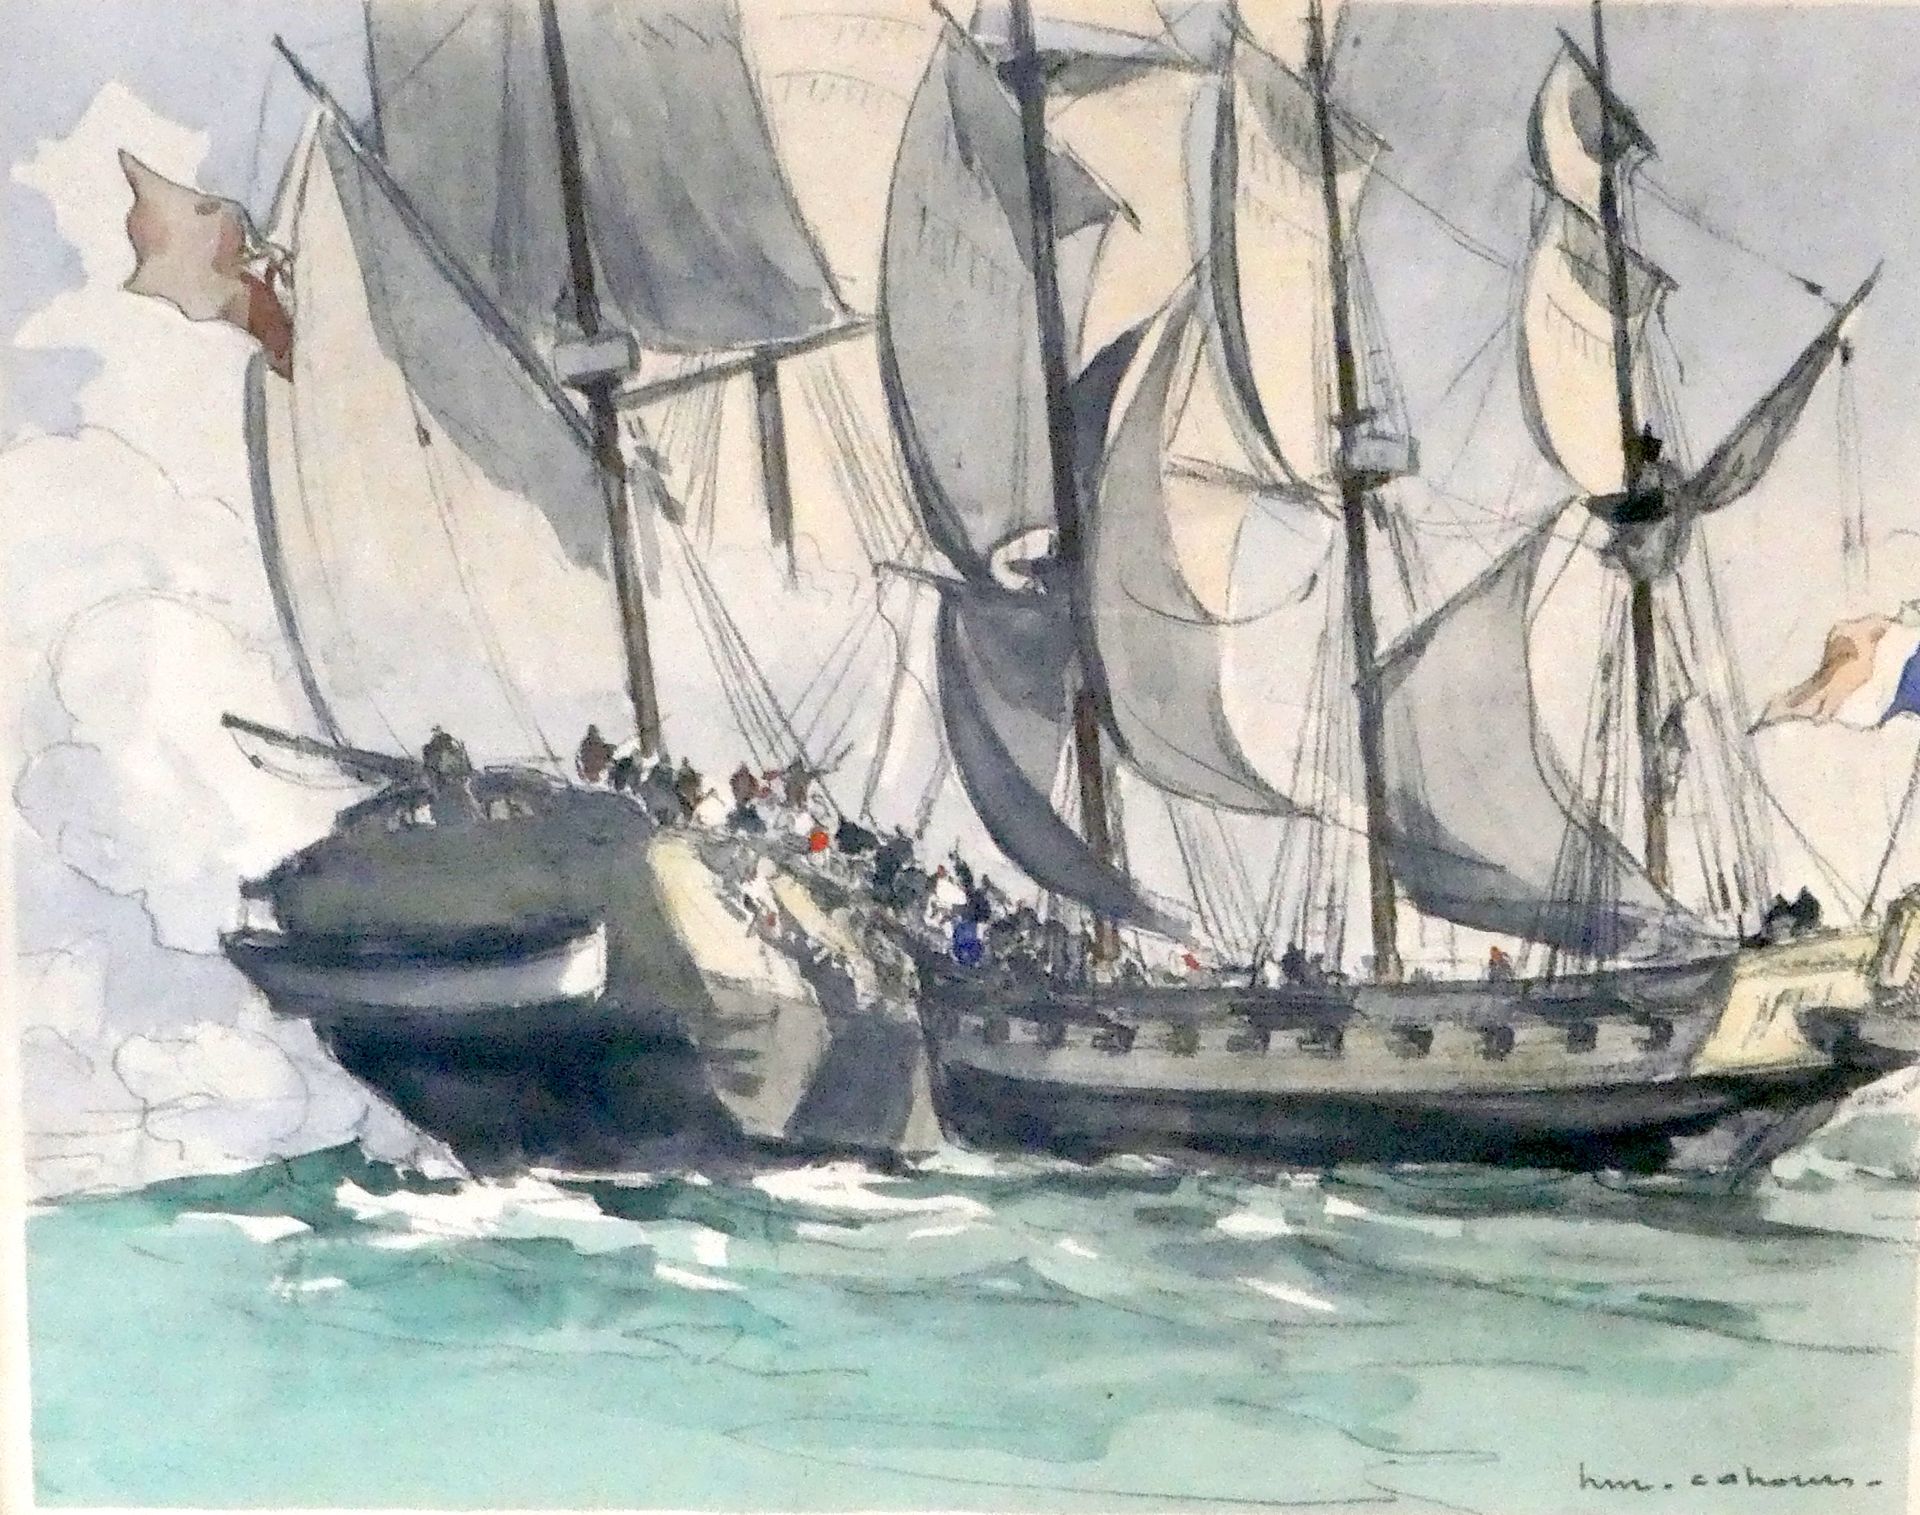 Null 亨利-莫里斯-卡胡斯(1889-1974)

海战

纸上水彩，右下方有签名。

尺寸：22 x 28厘米